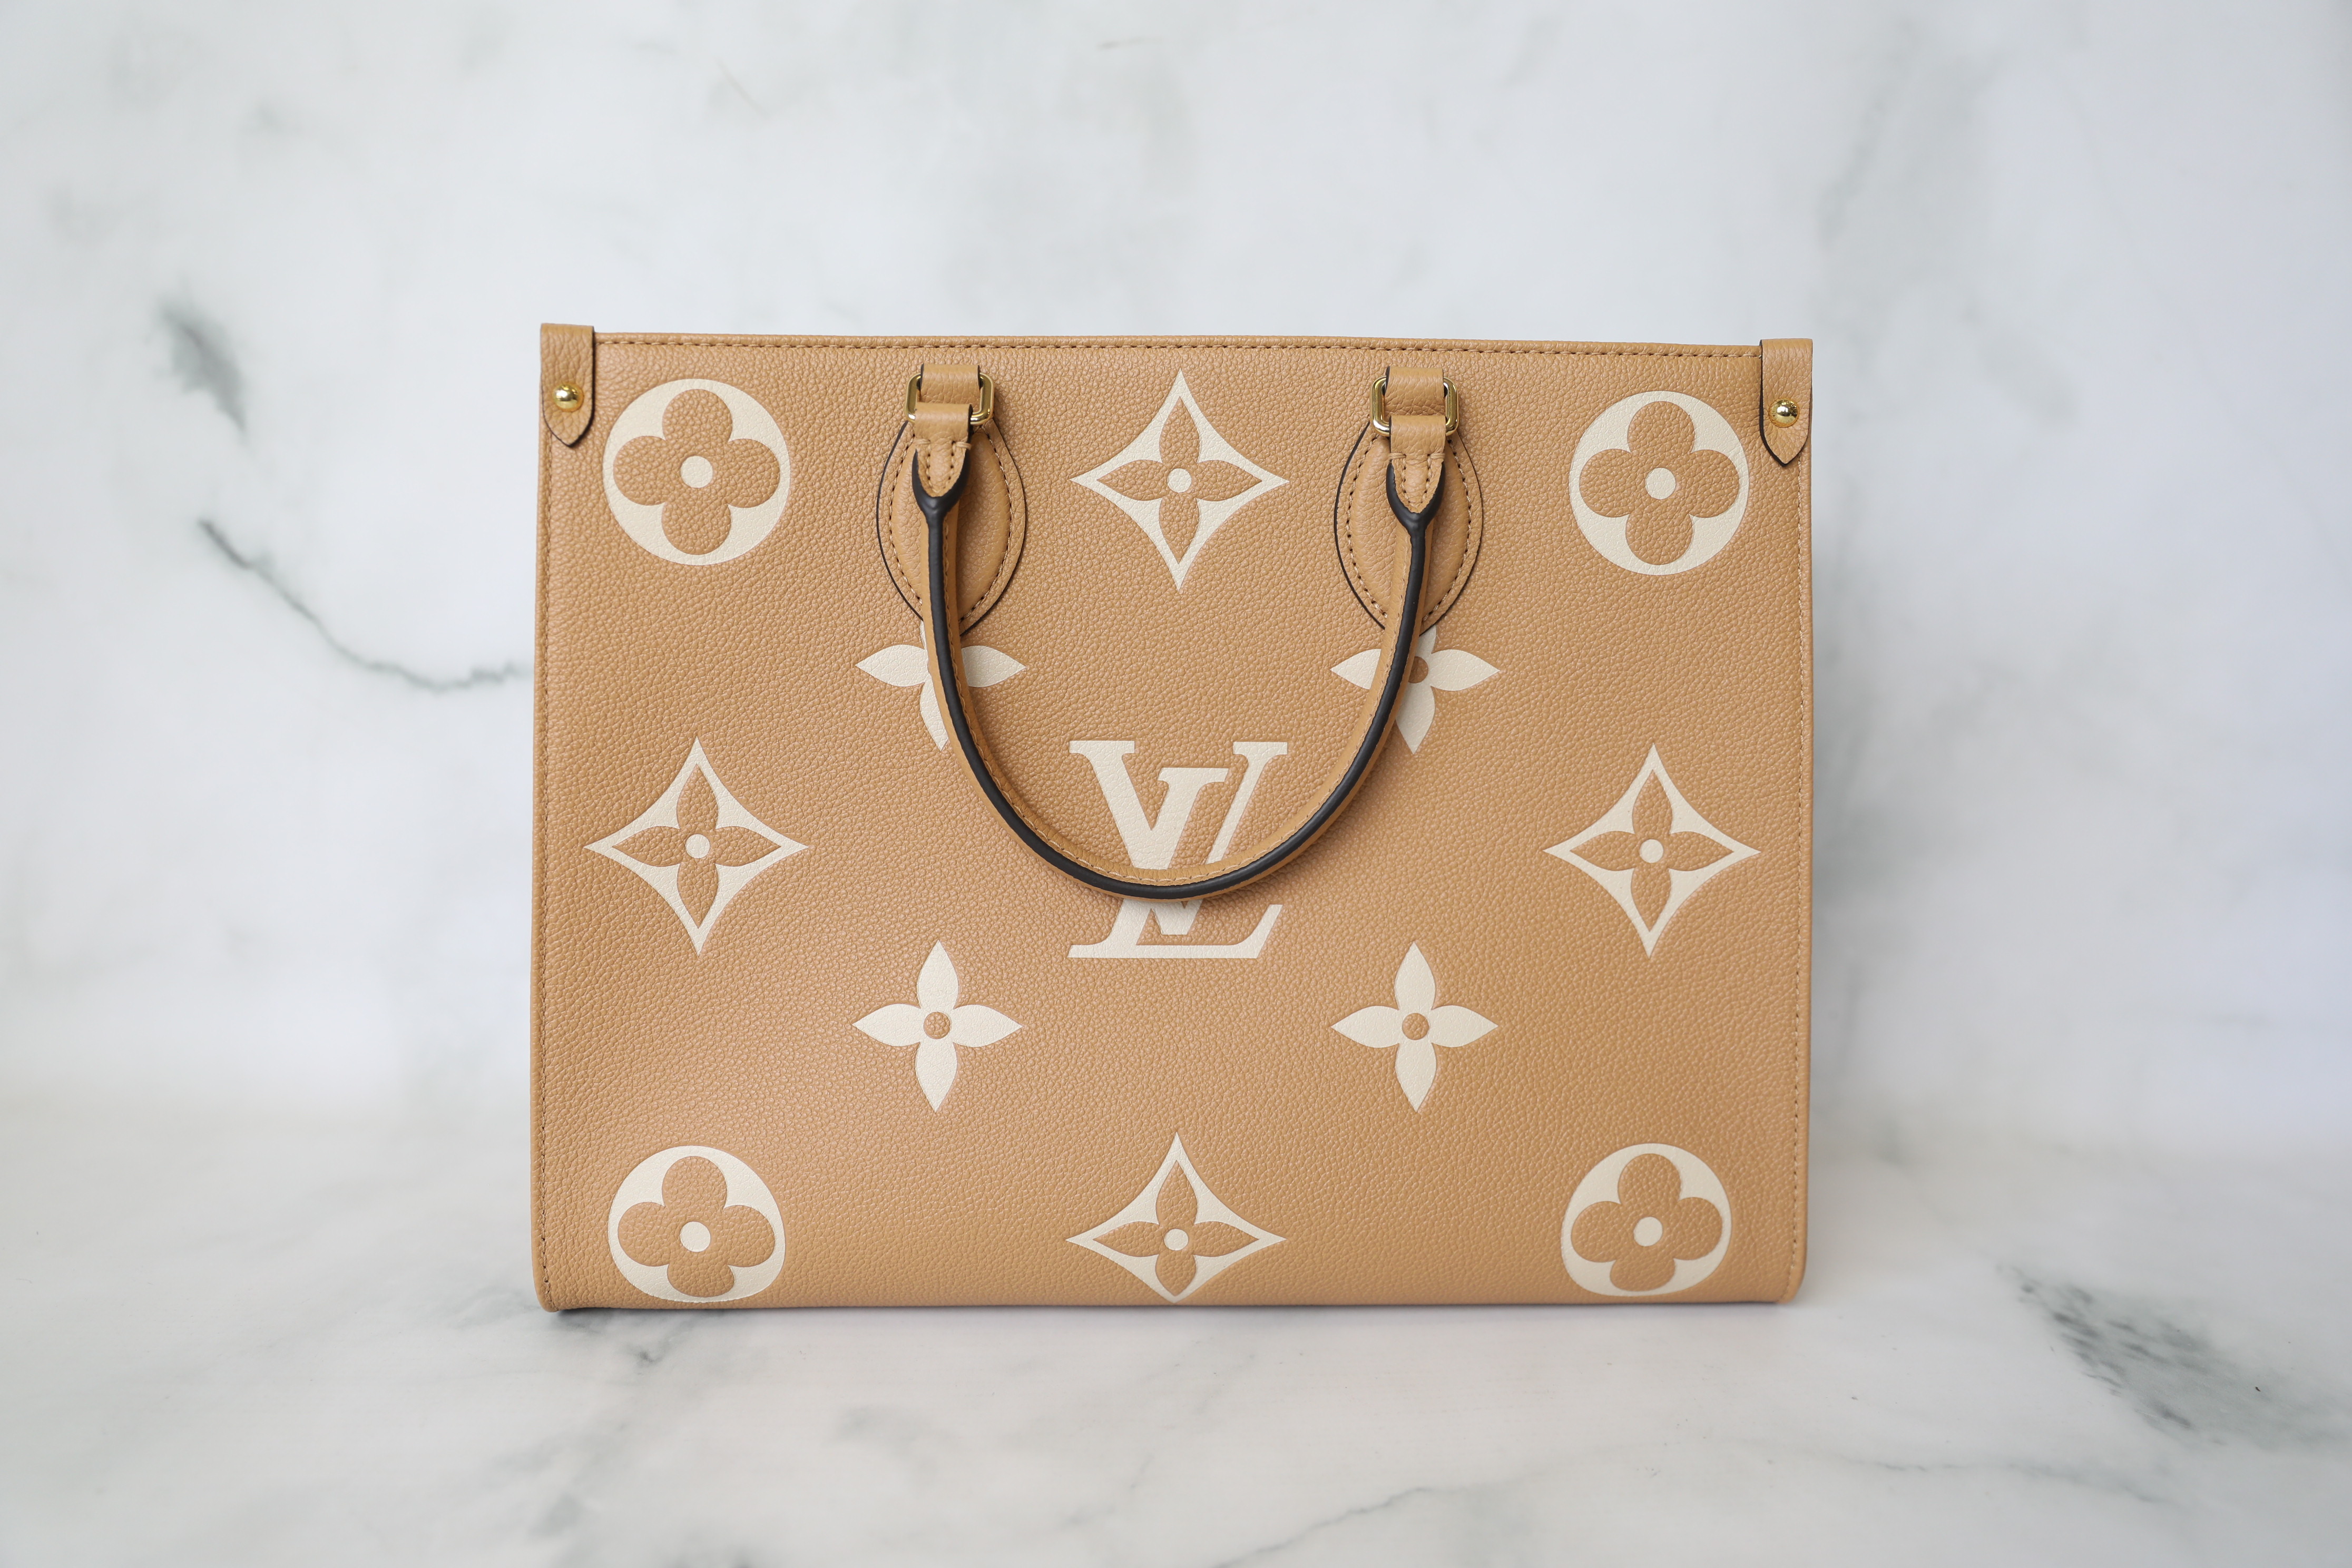 Louis Vuitton V Tote MM, Beige and White Empreinte Leather, Preowned in  Dustbag WA001 - Julia Rose Boston